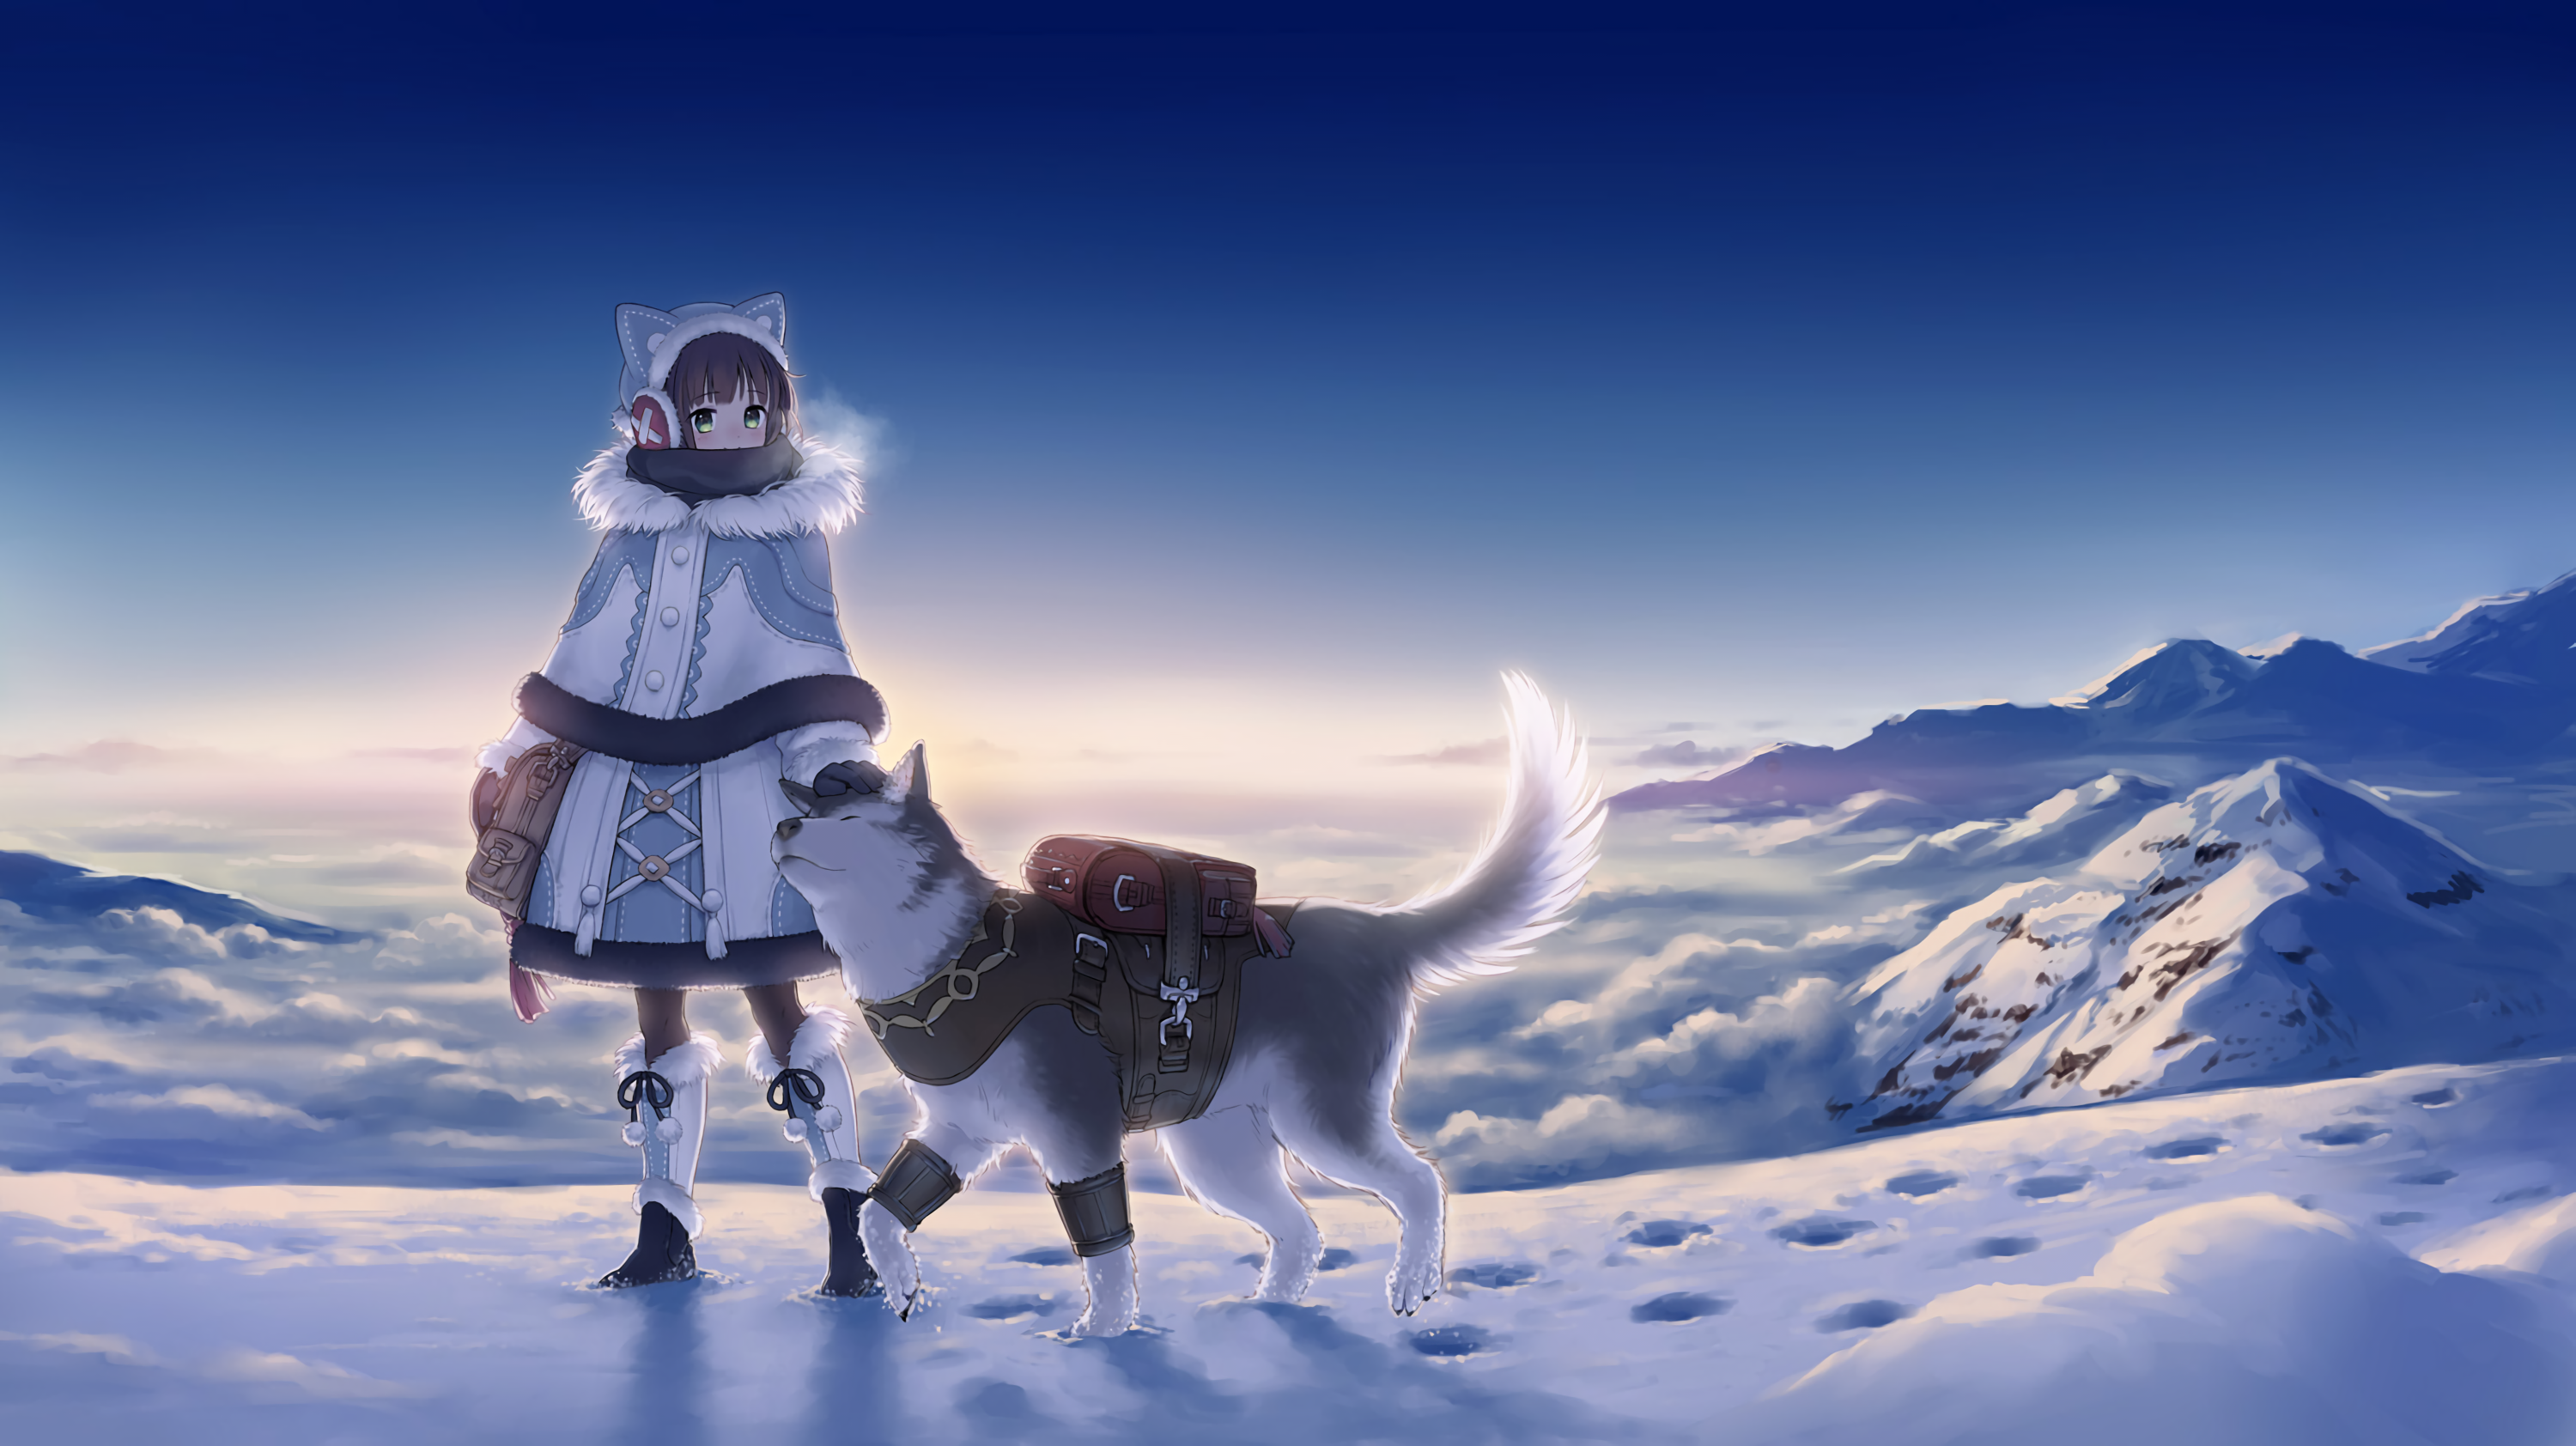 Sky Dog Snow Landscape Boots Animal Ears Scarf Snowy Peak Anime Nylons Sunlight Backpacks Green Eyes 3000x1684